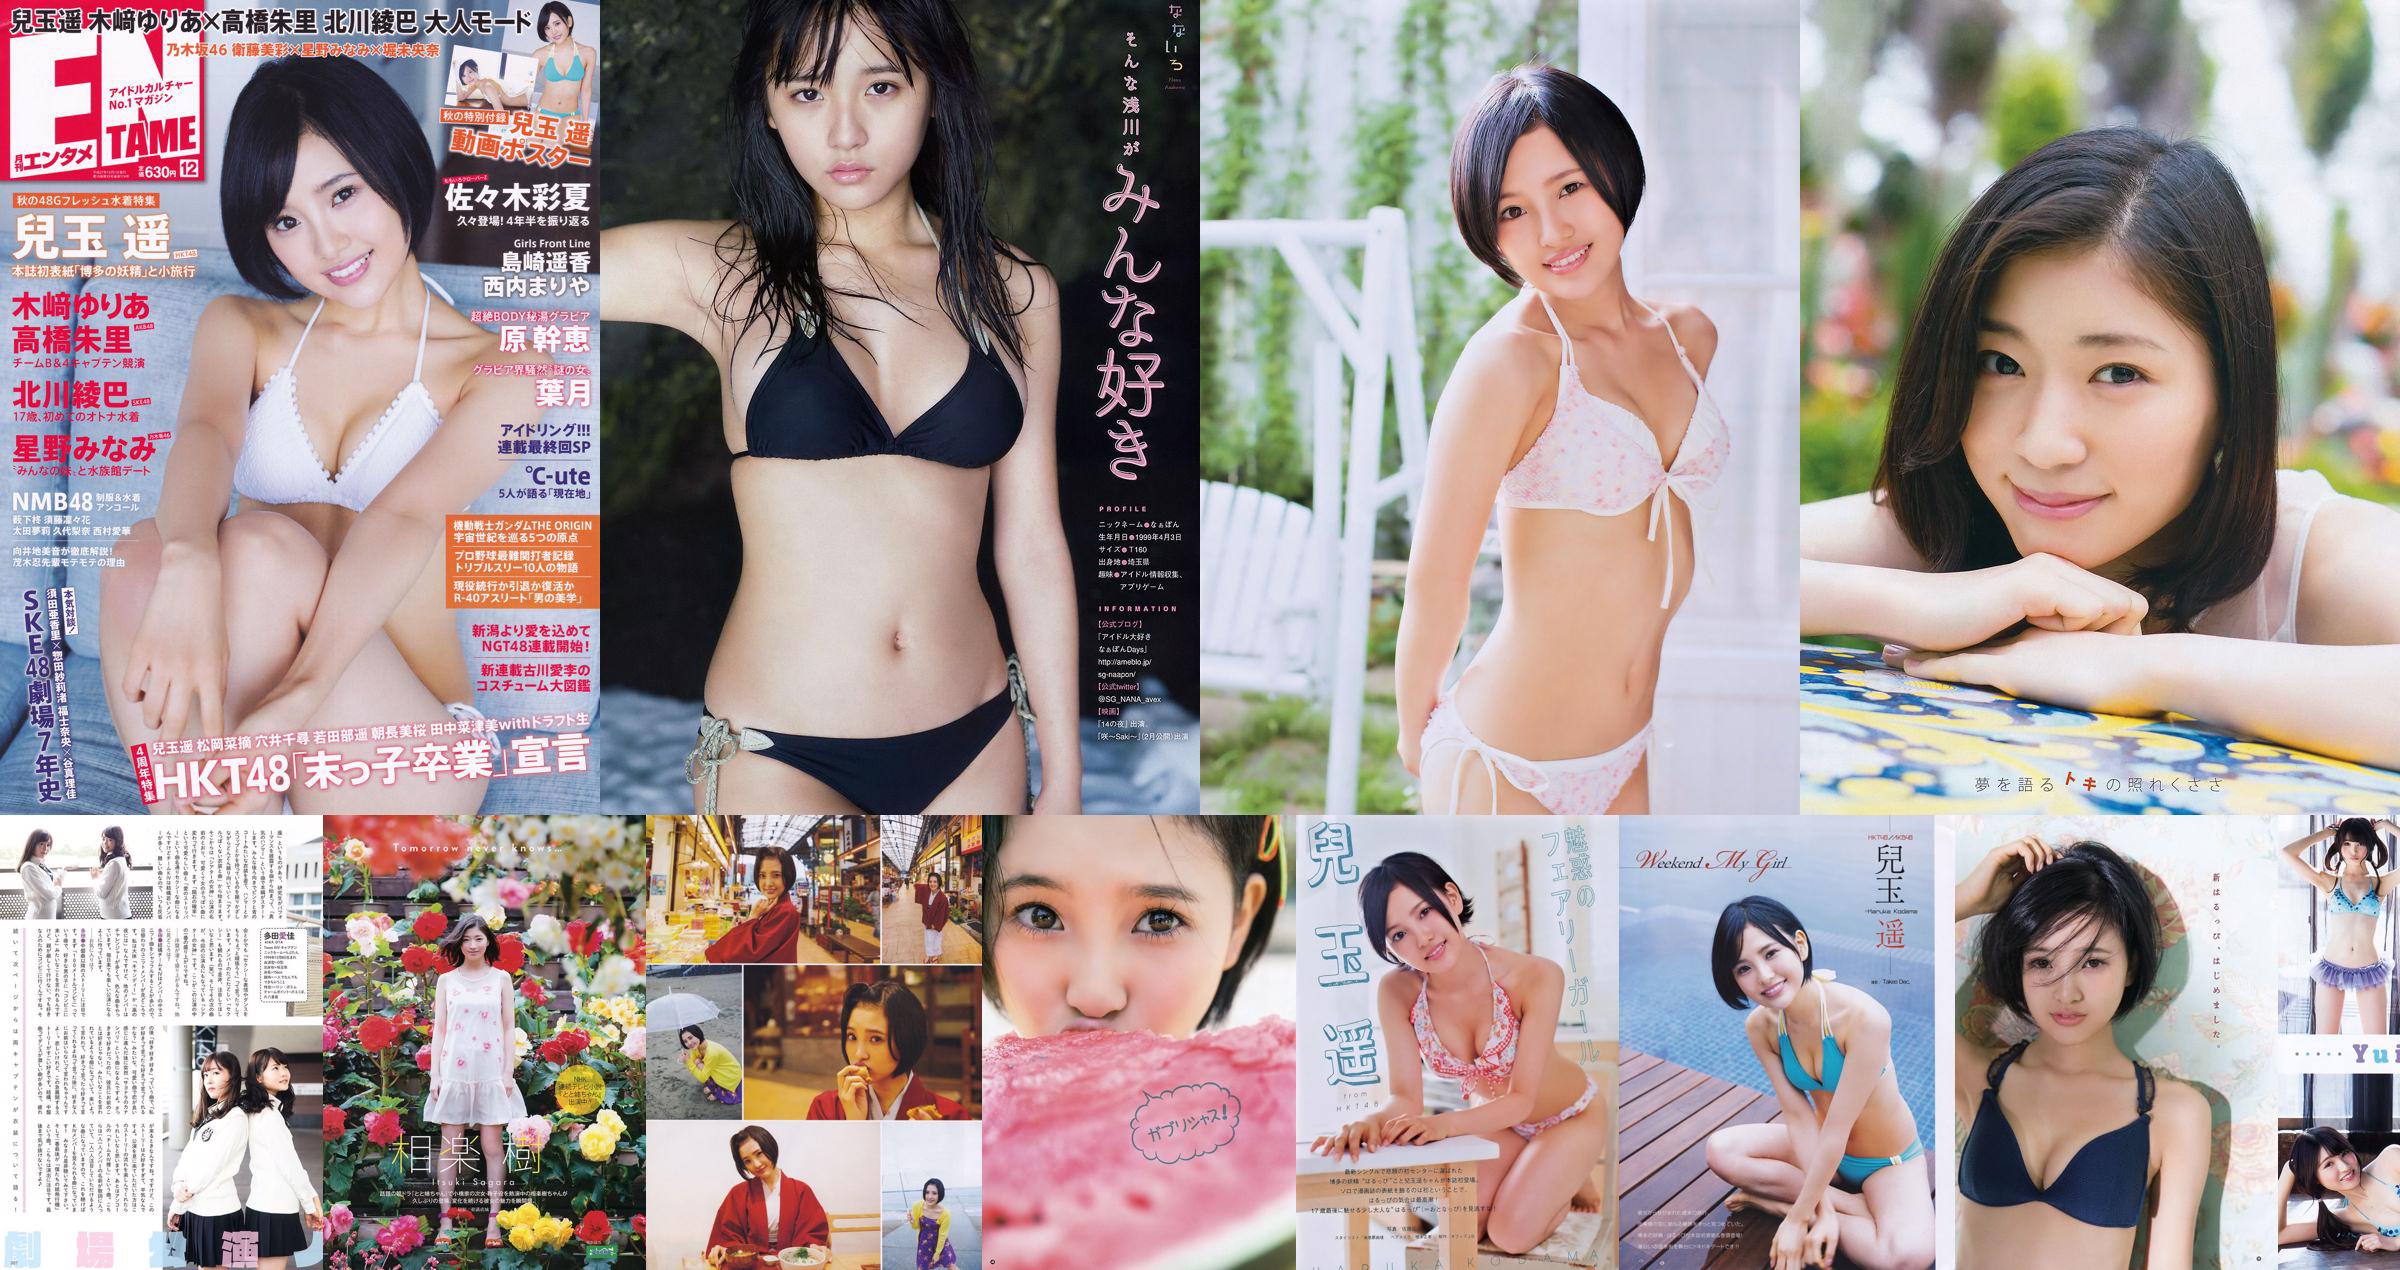 [Jovem Campeão] Haruka Kodama Saya Kataoka 2015 Fotografia No.17 No.068c7a Página 2